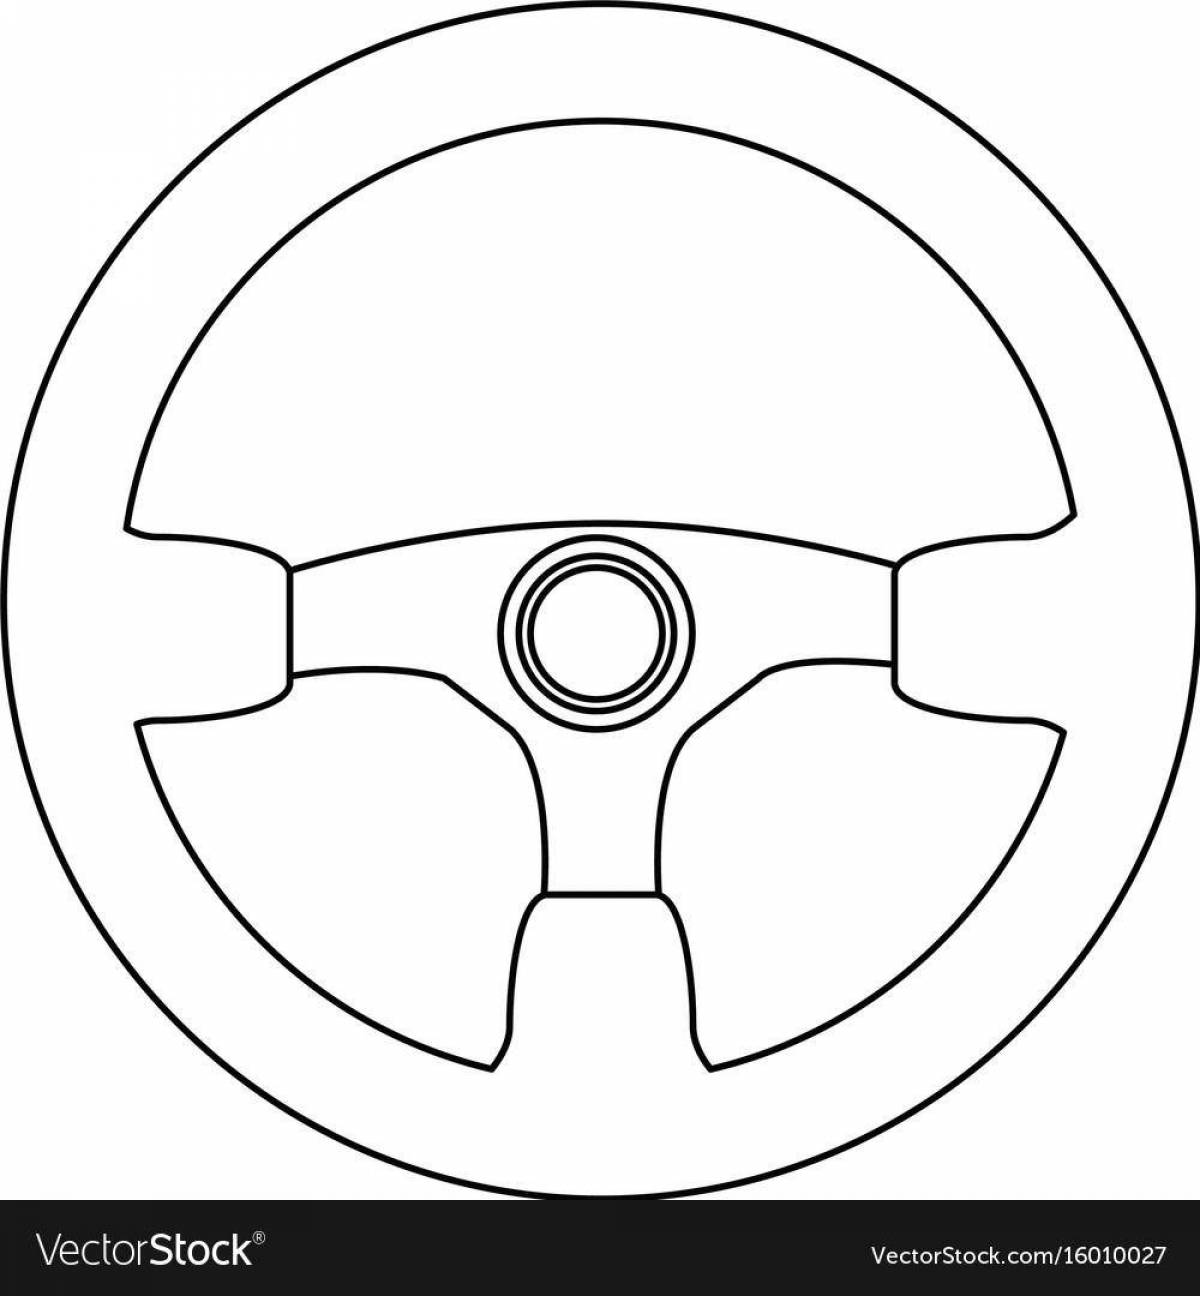 Invitation steering wheel coloring page